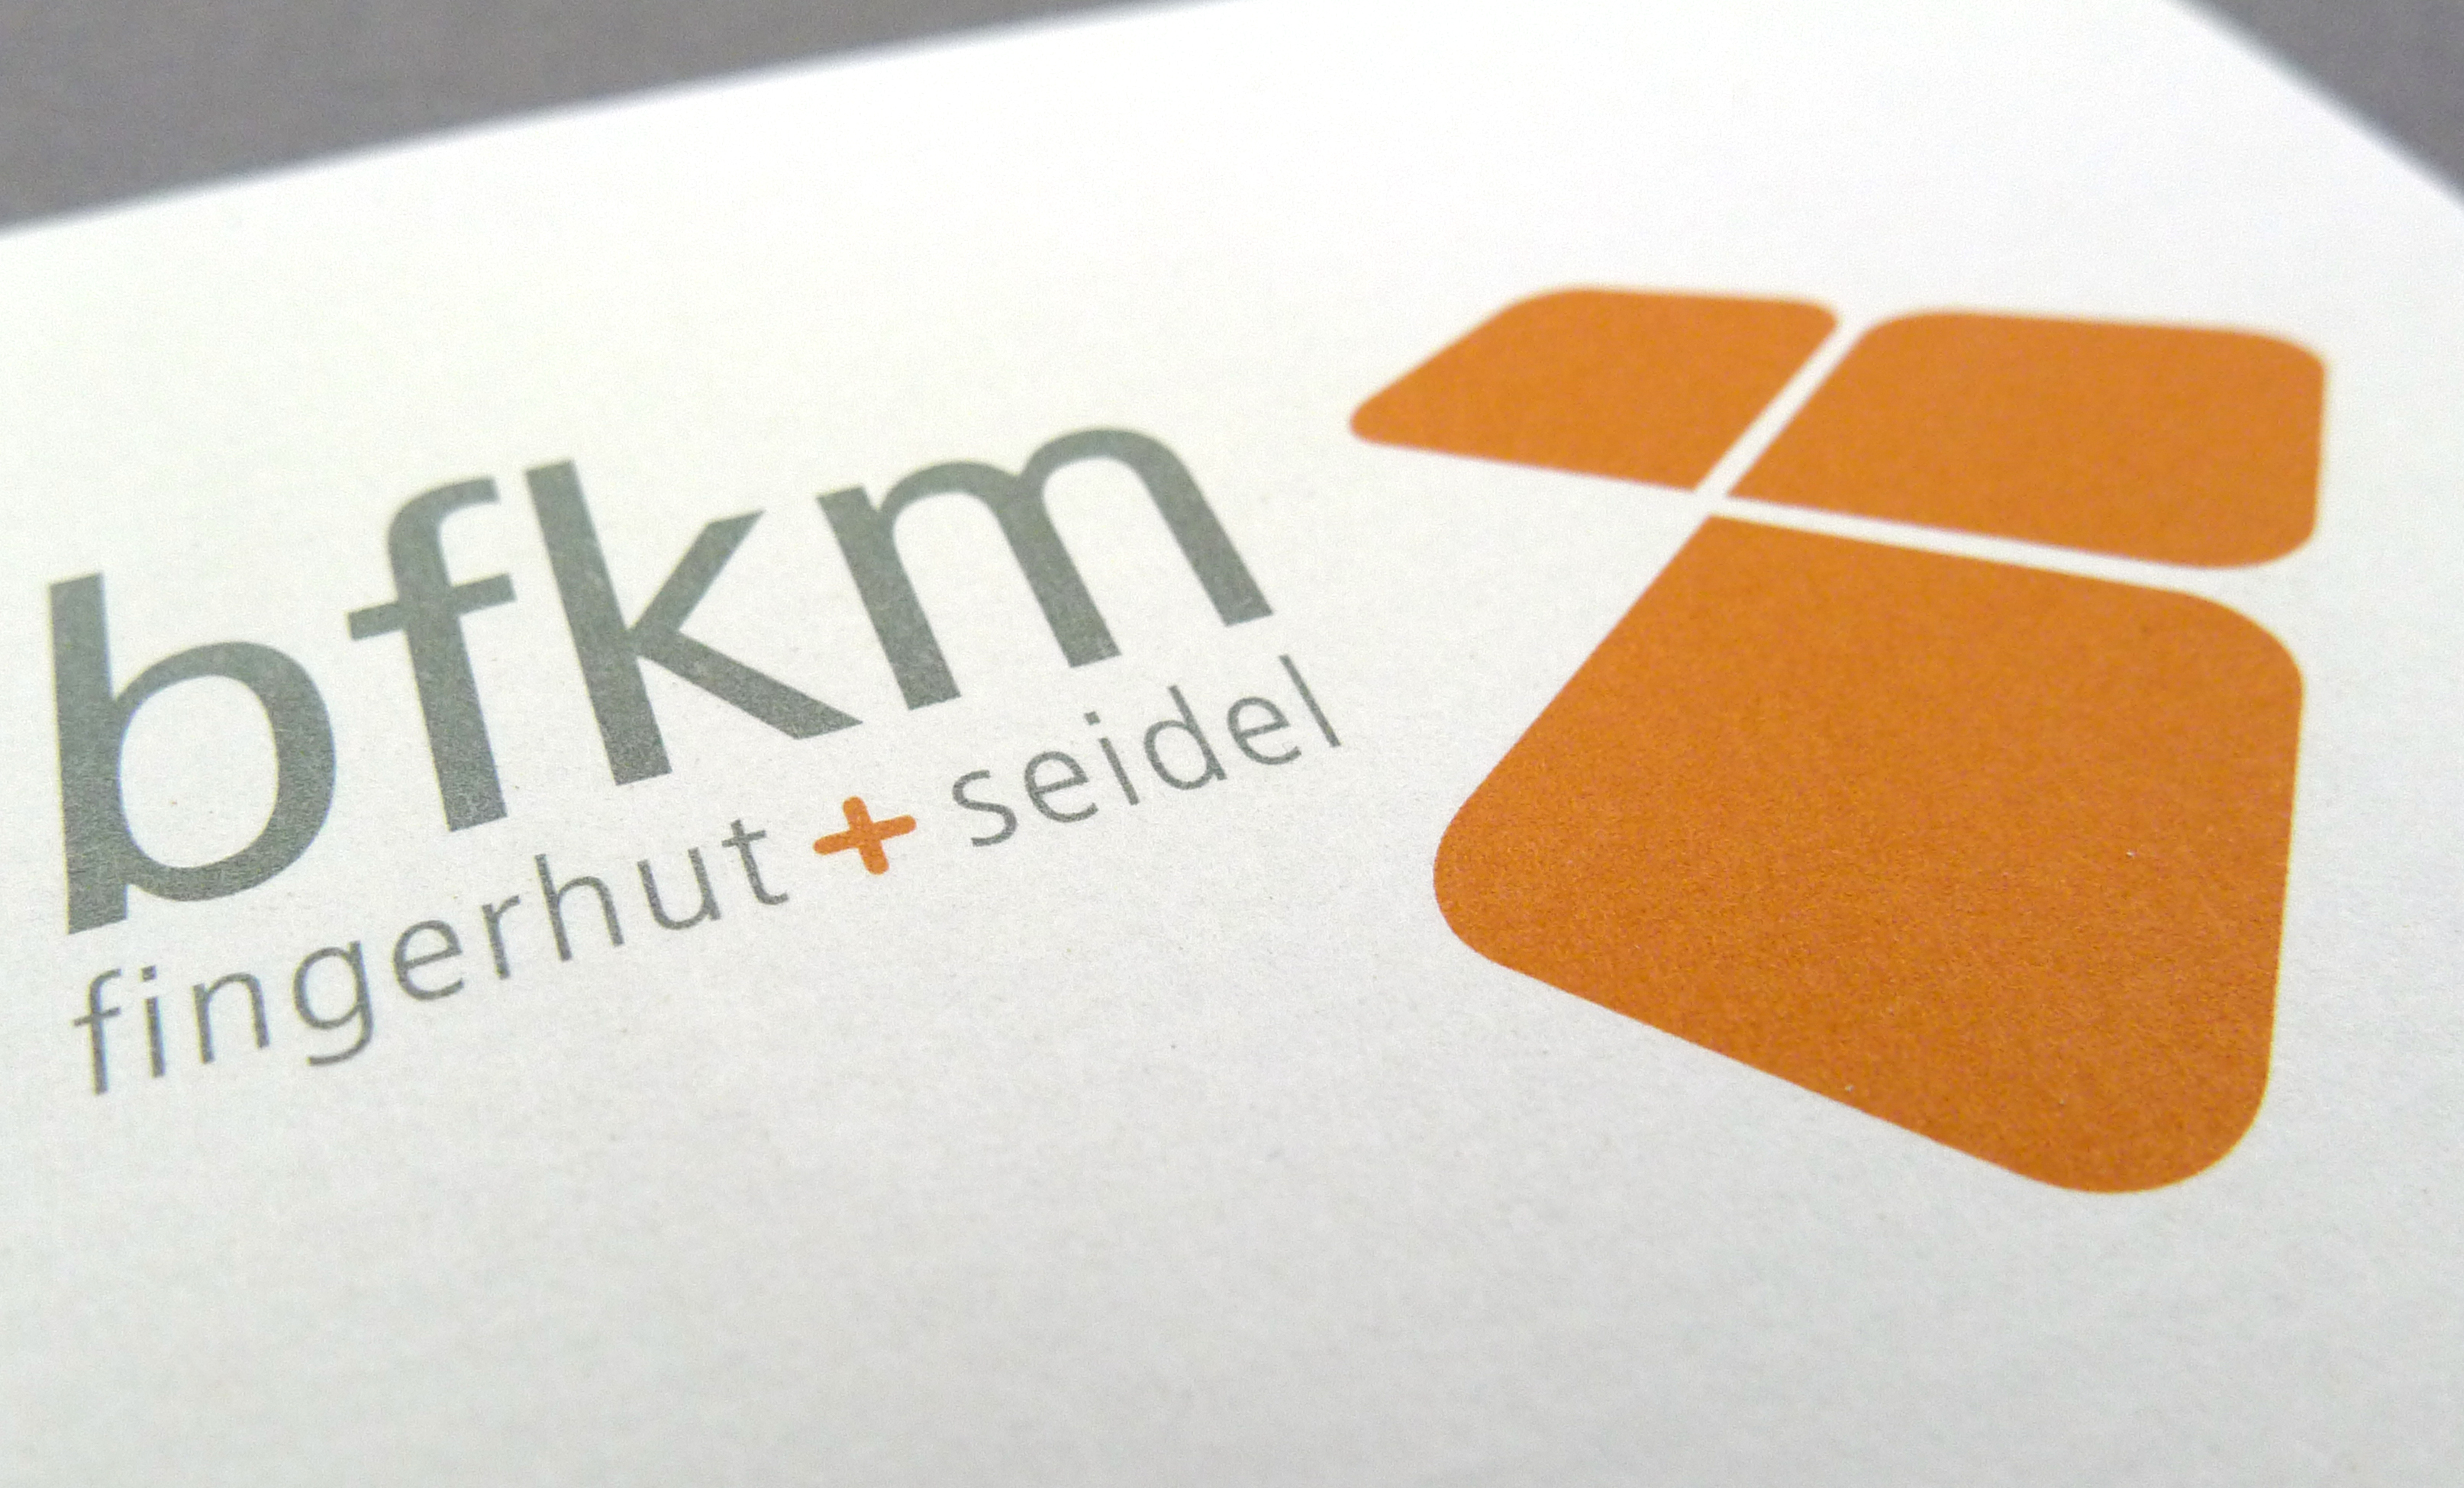 Logo BFKM Fingerhut+Seidel evergreen